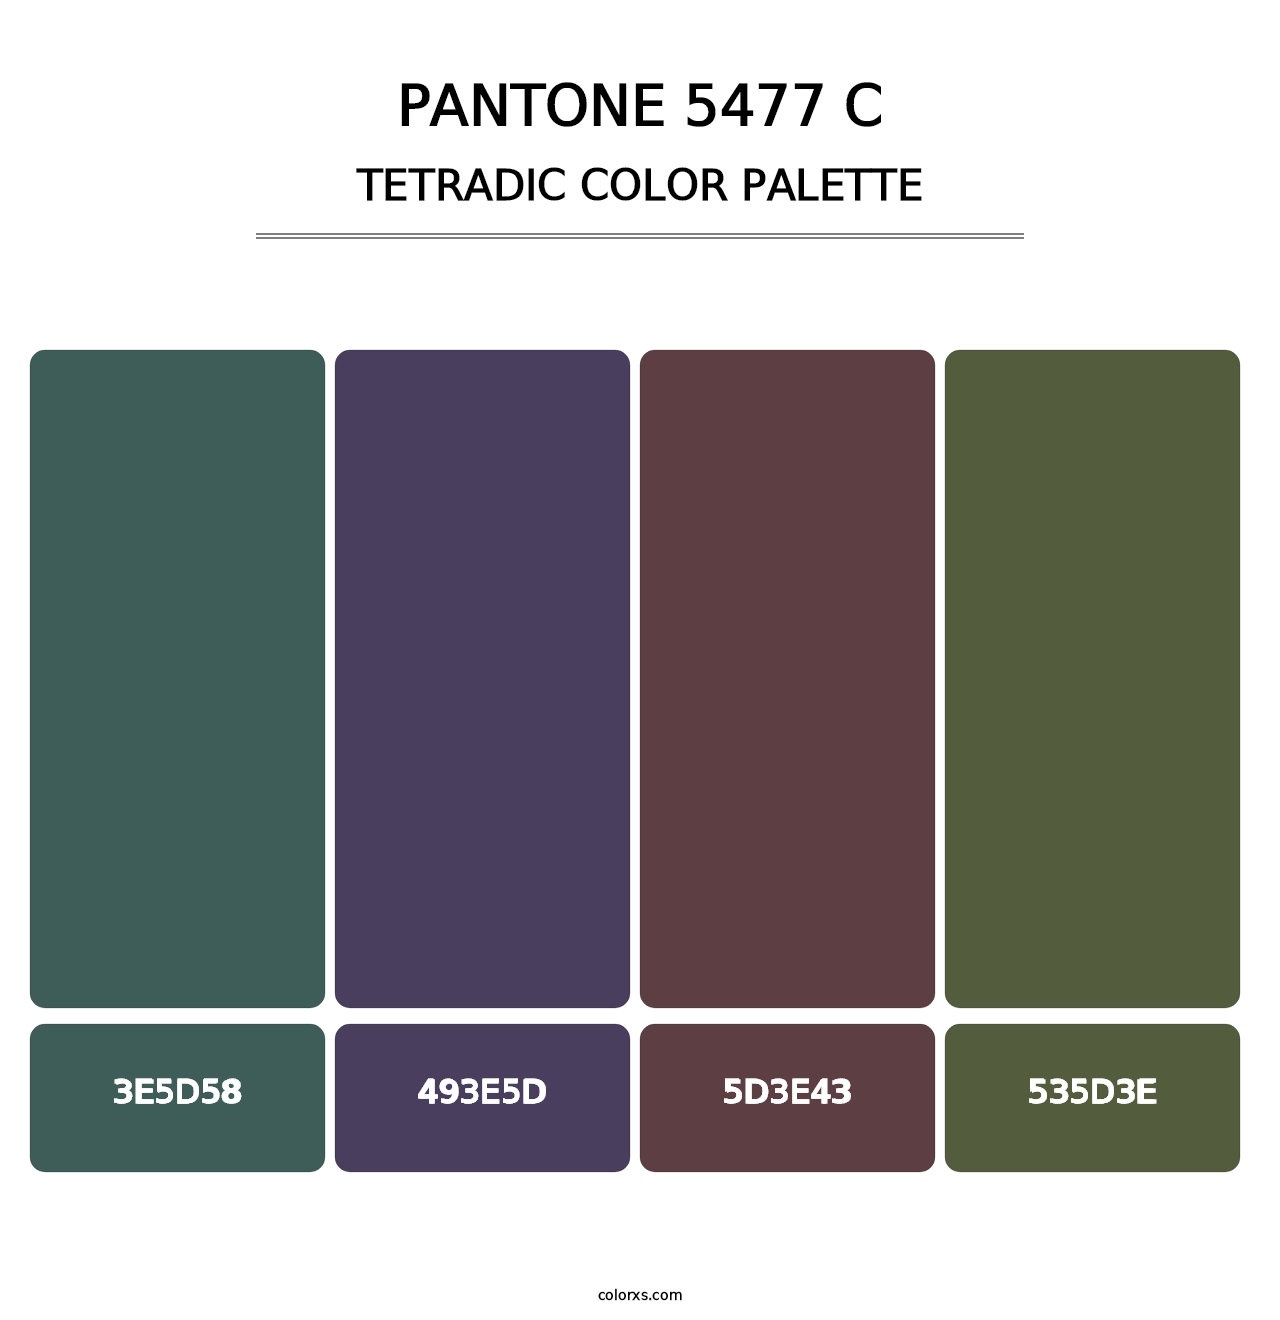 PANTONE 5477 C - Tetradic Color Palette